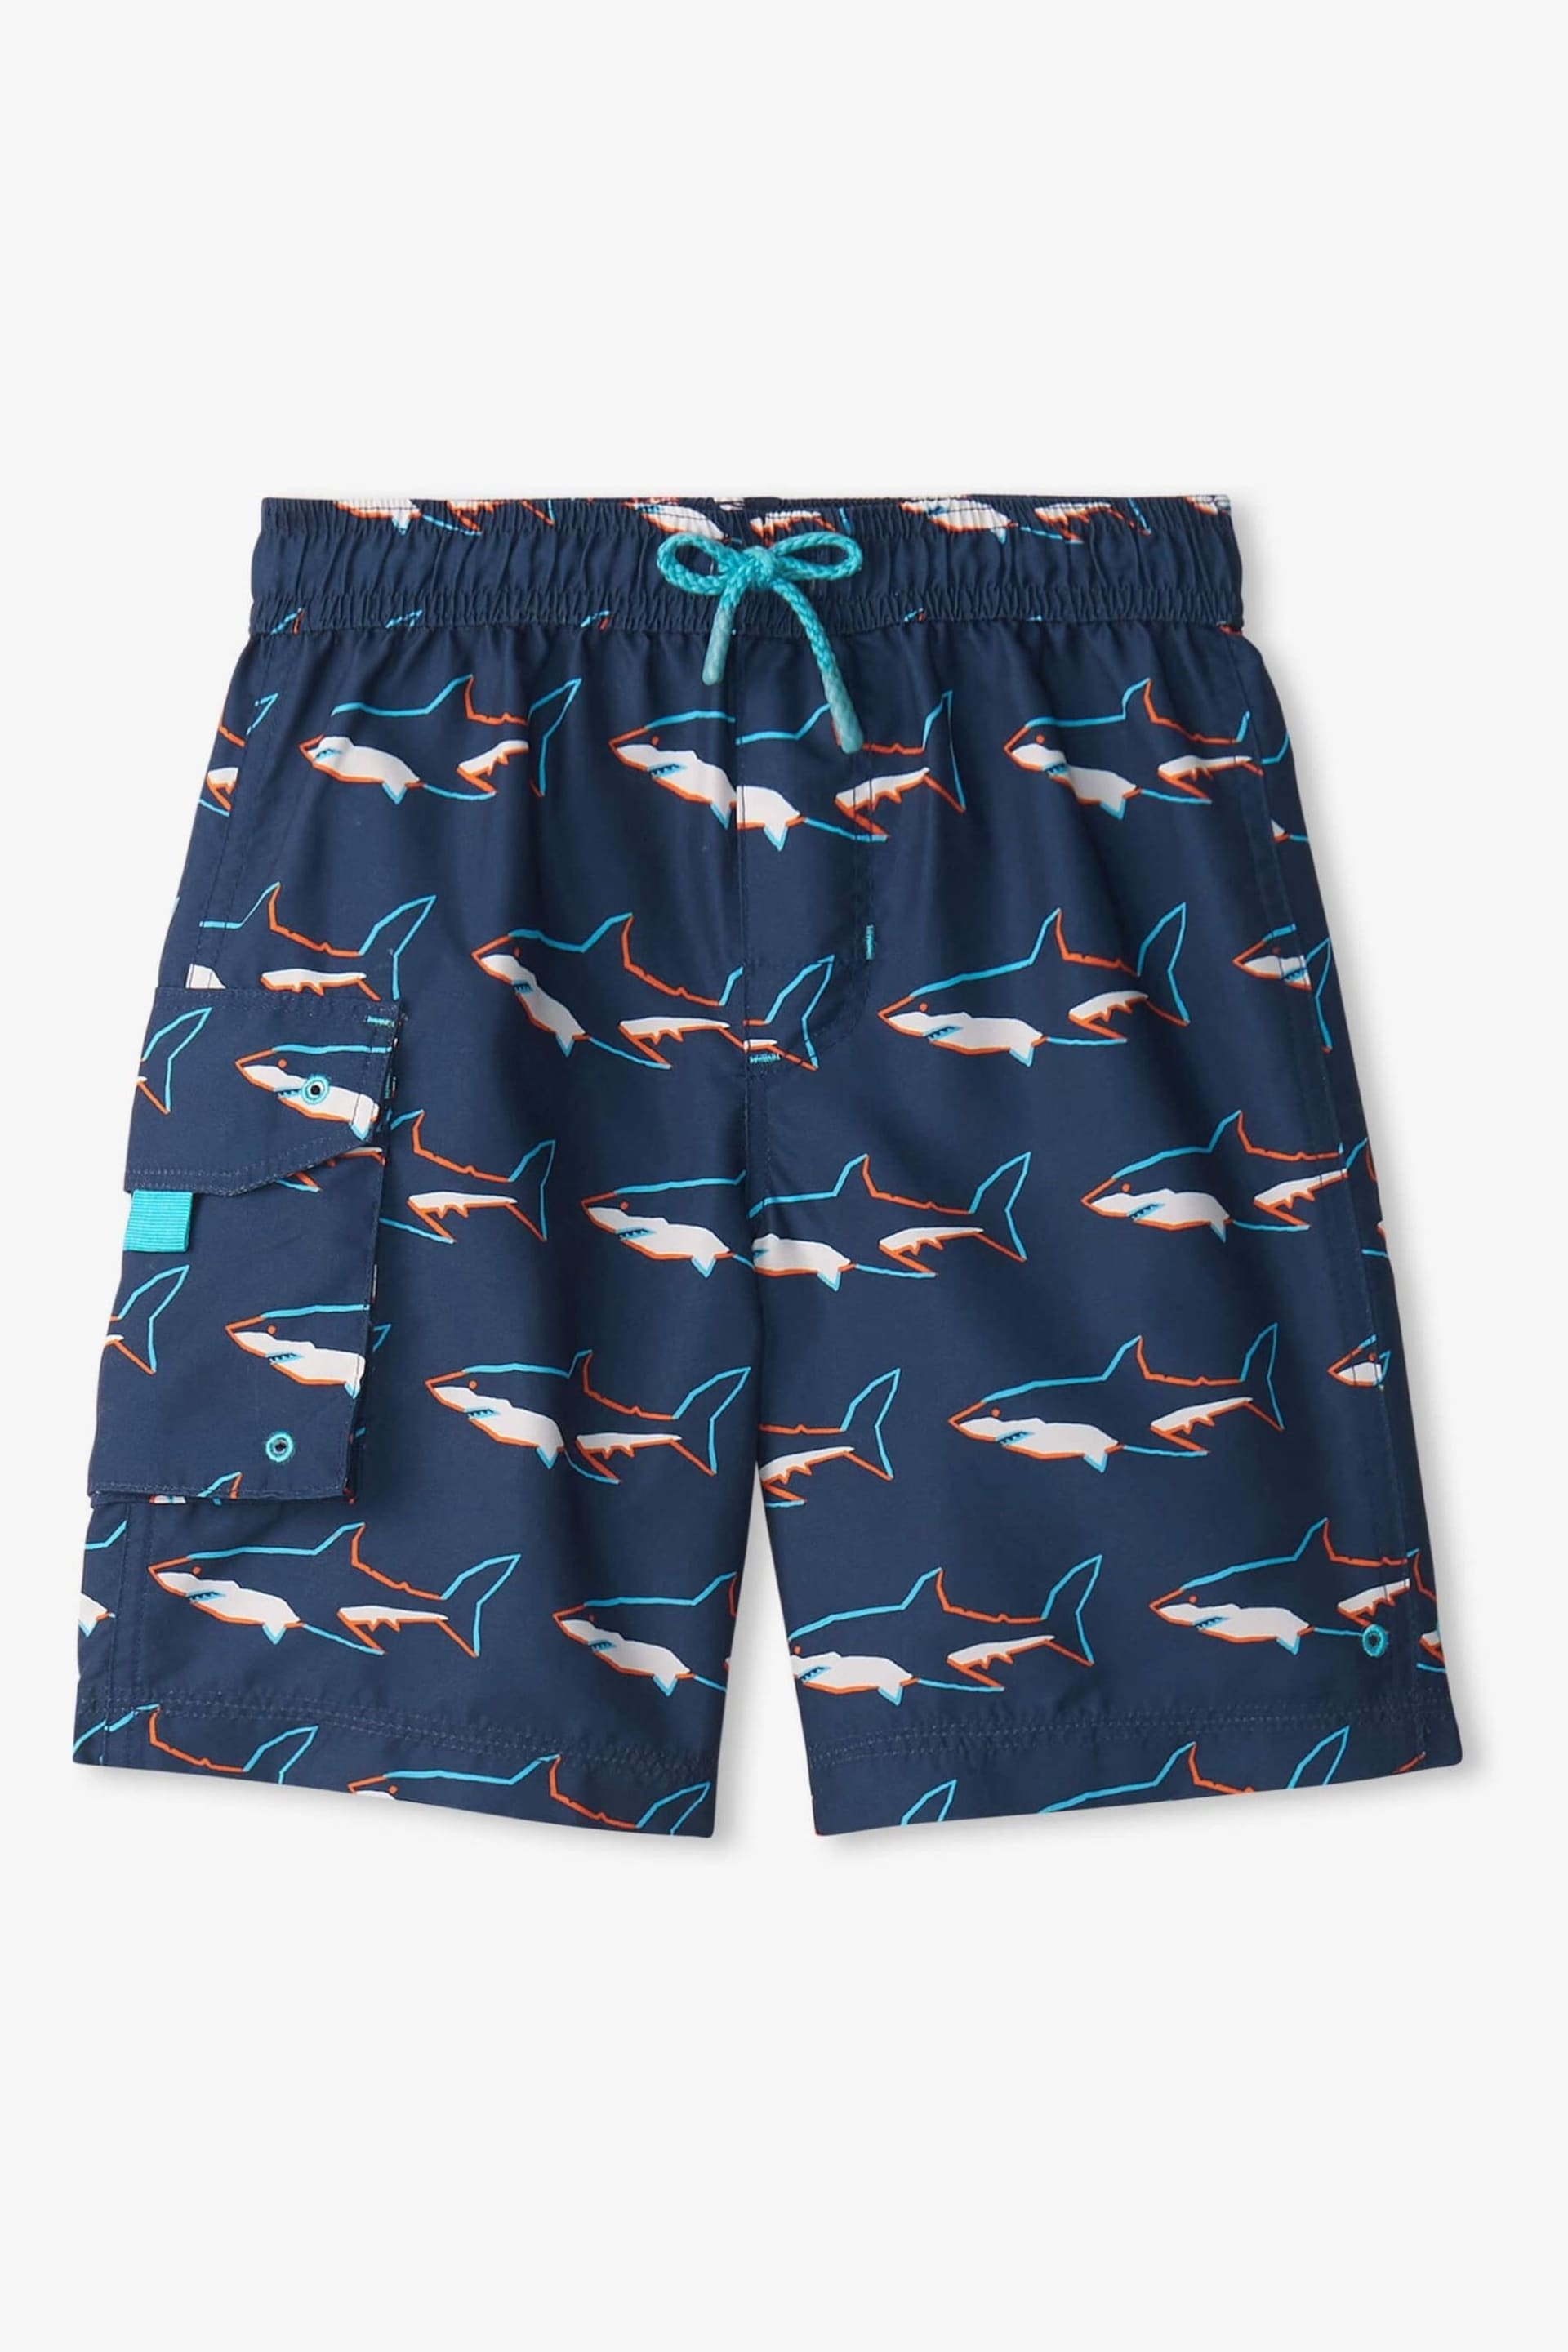 Hatley Tropical Sharks Swim Shorts - Image 1 of 6